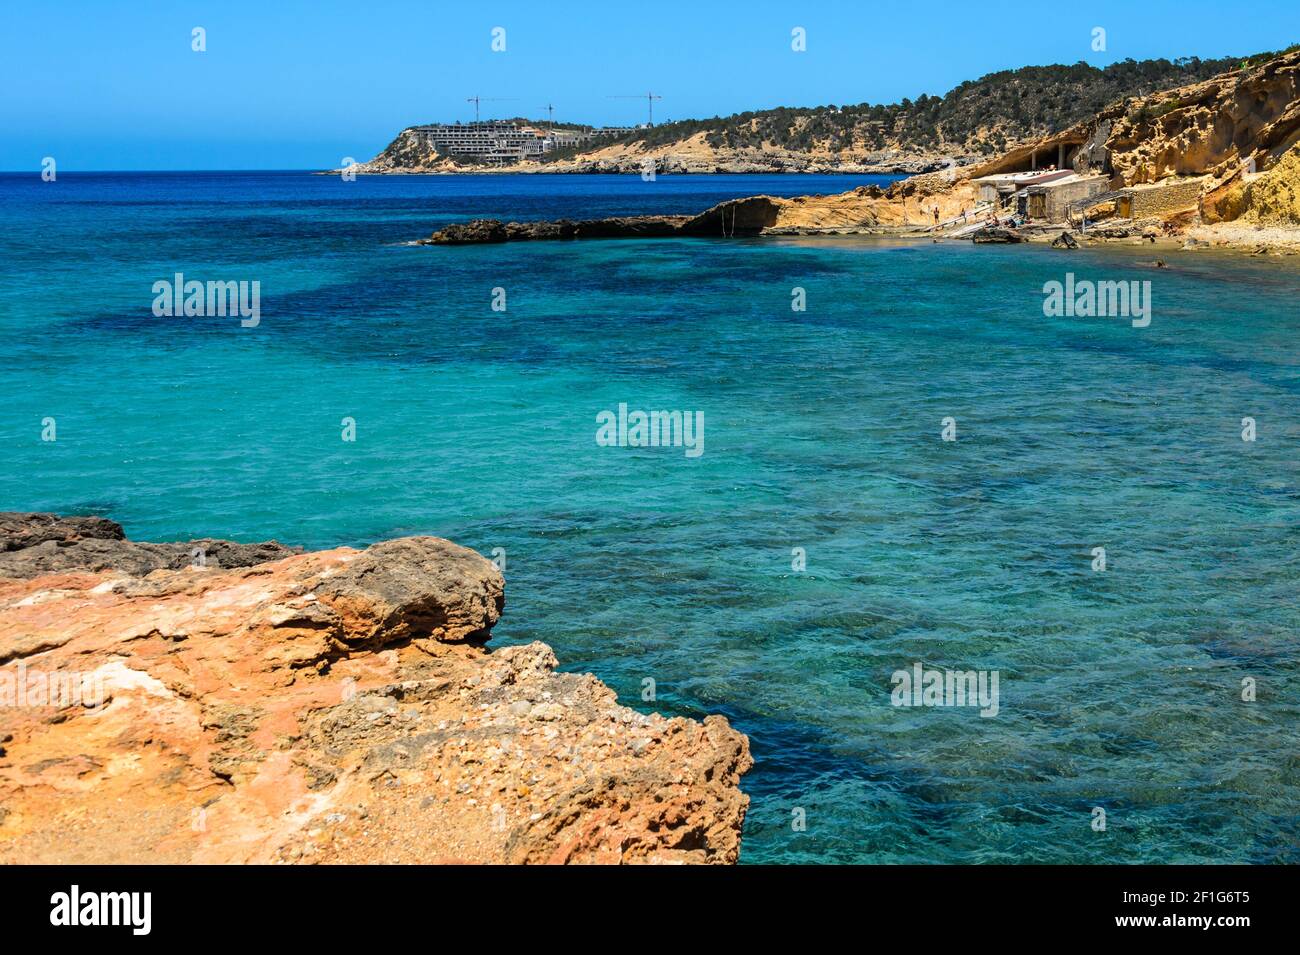 Cala Xarraca, Ibiza, Spain - May 28, 2020: Cala Xarraca one of the best known beaches on the north coast of Ibiza. A steep coast with coarse sand beac Stock Photo